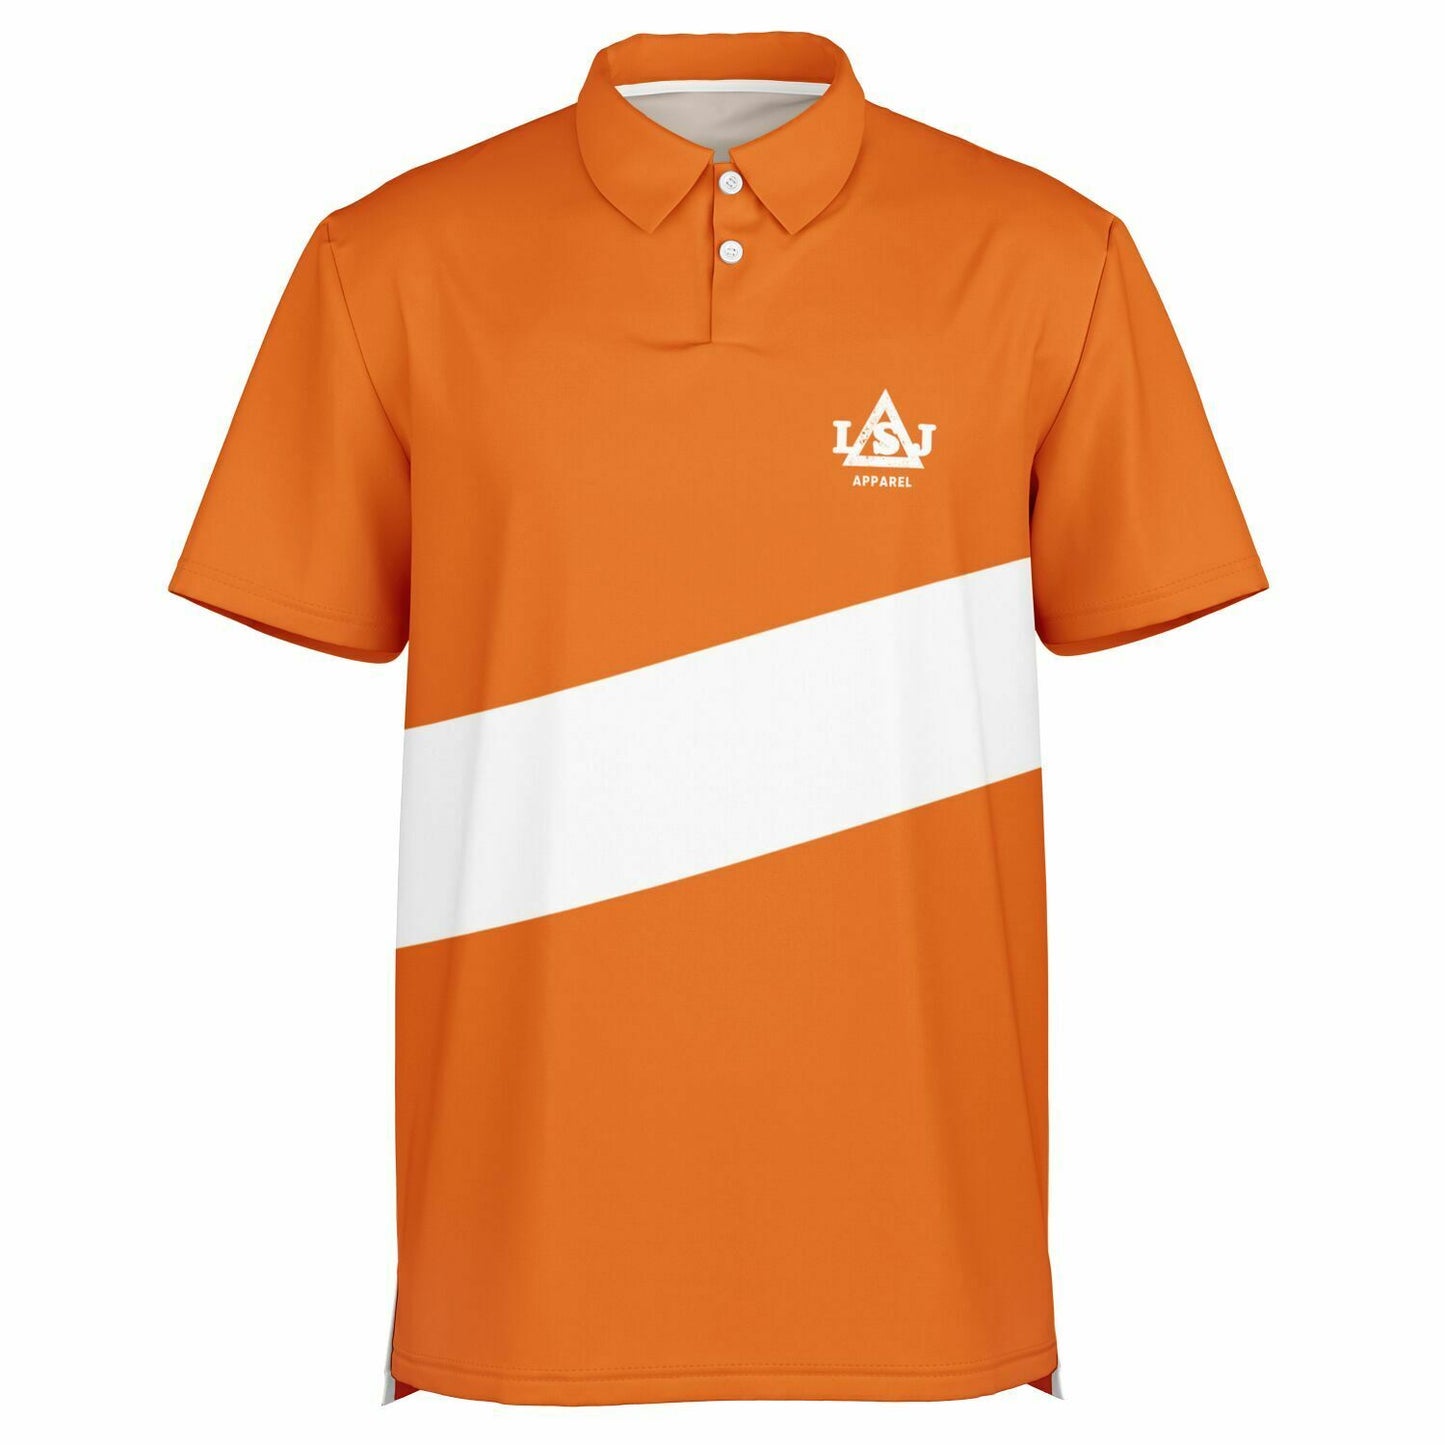 LSJ Orange & White Men's Polo Shirt